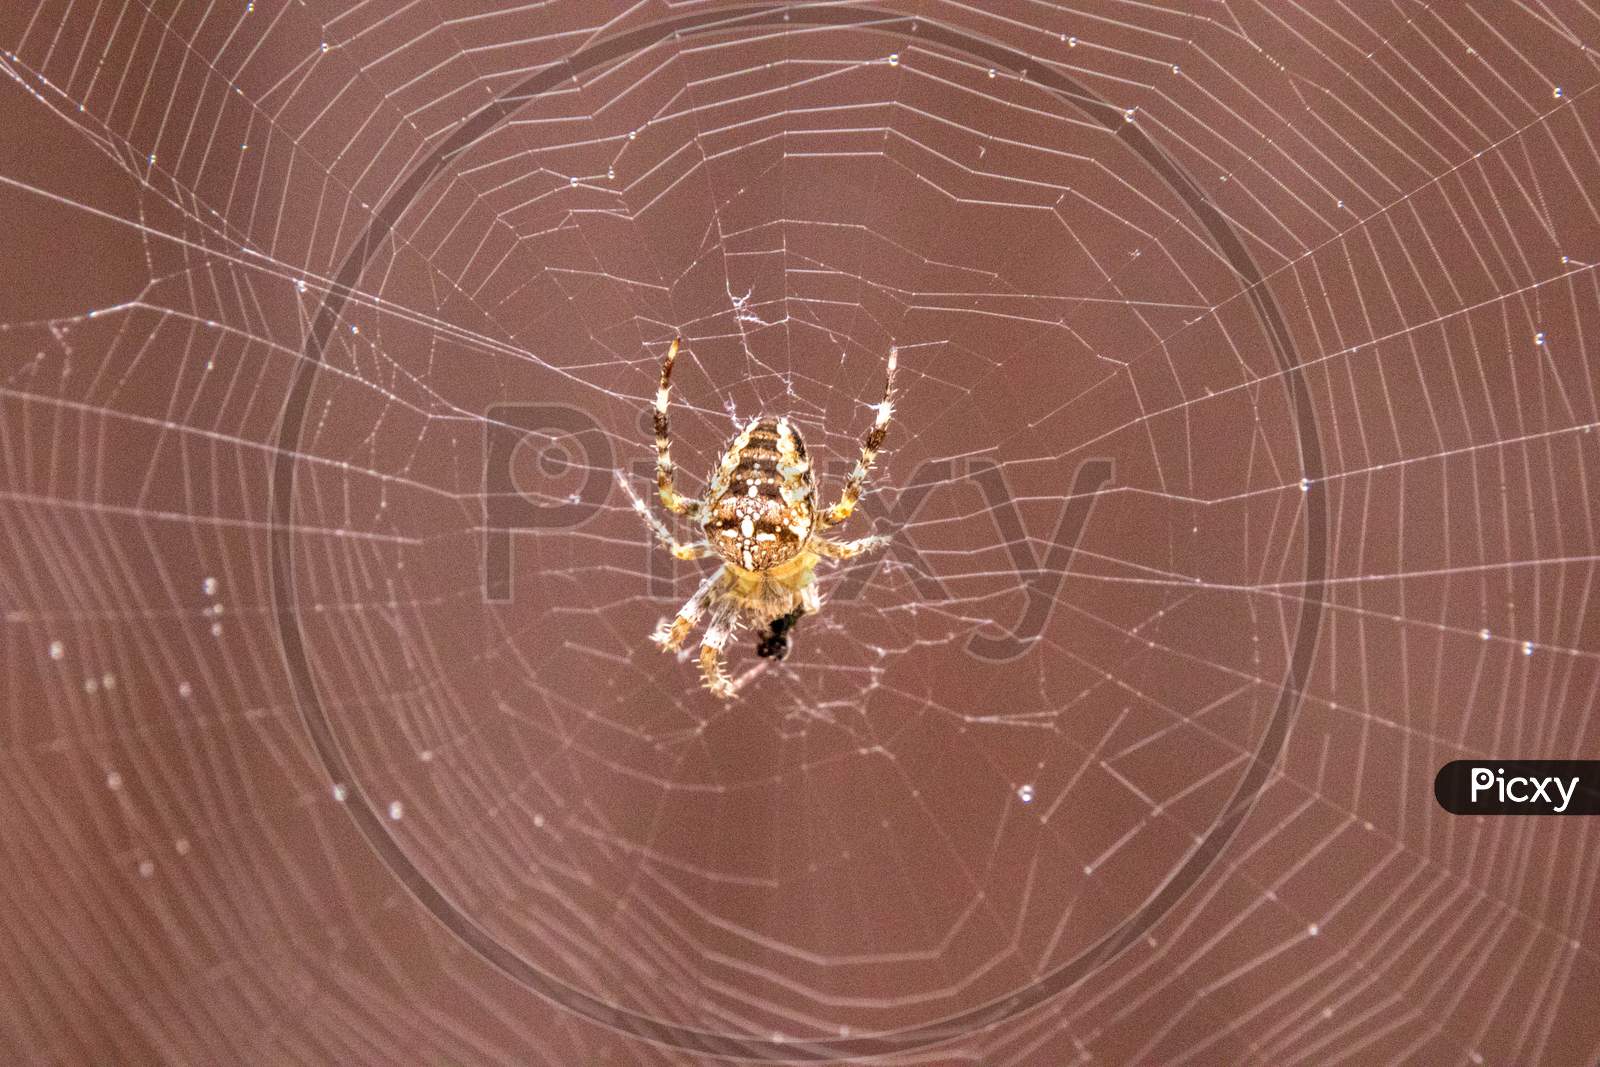 Spider Web Design